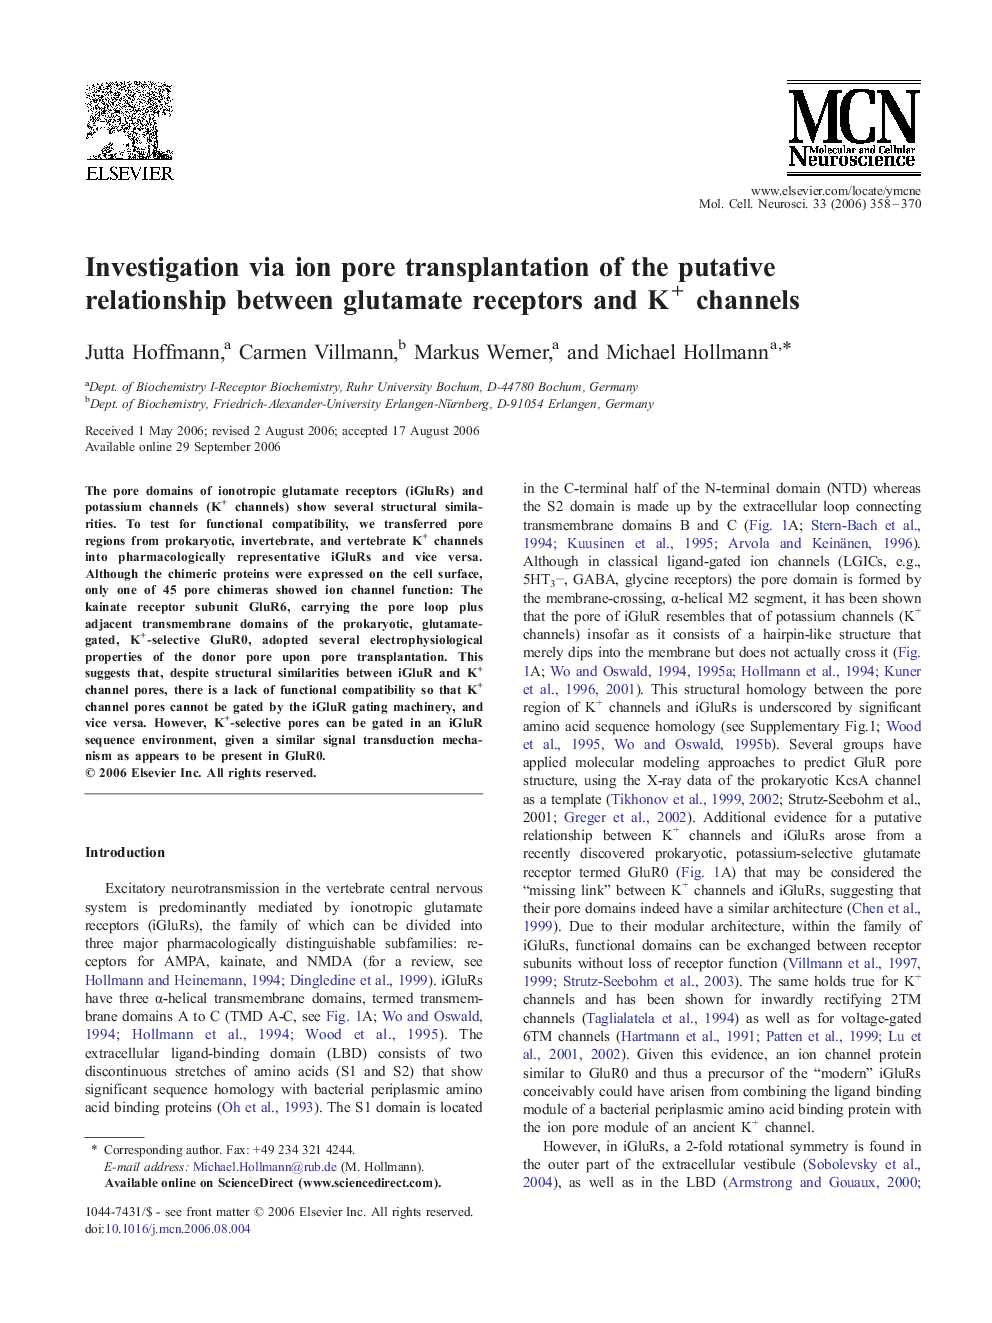 Investigation via ion pore transplantation of the putative relationship between glutamate receptors and K+ channels